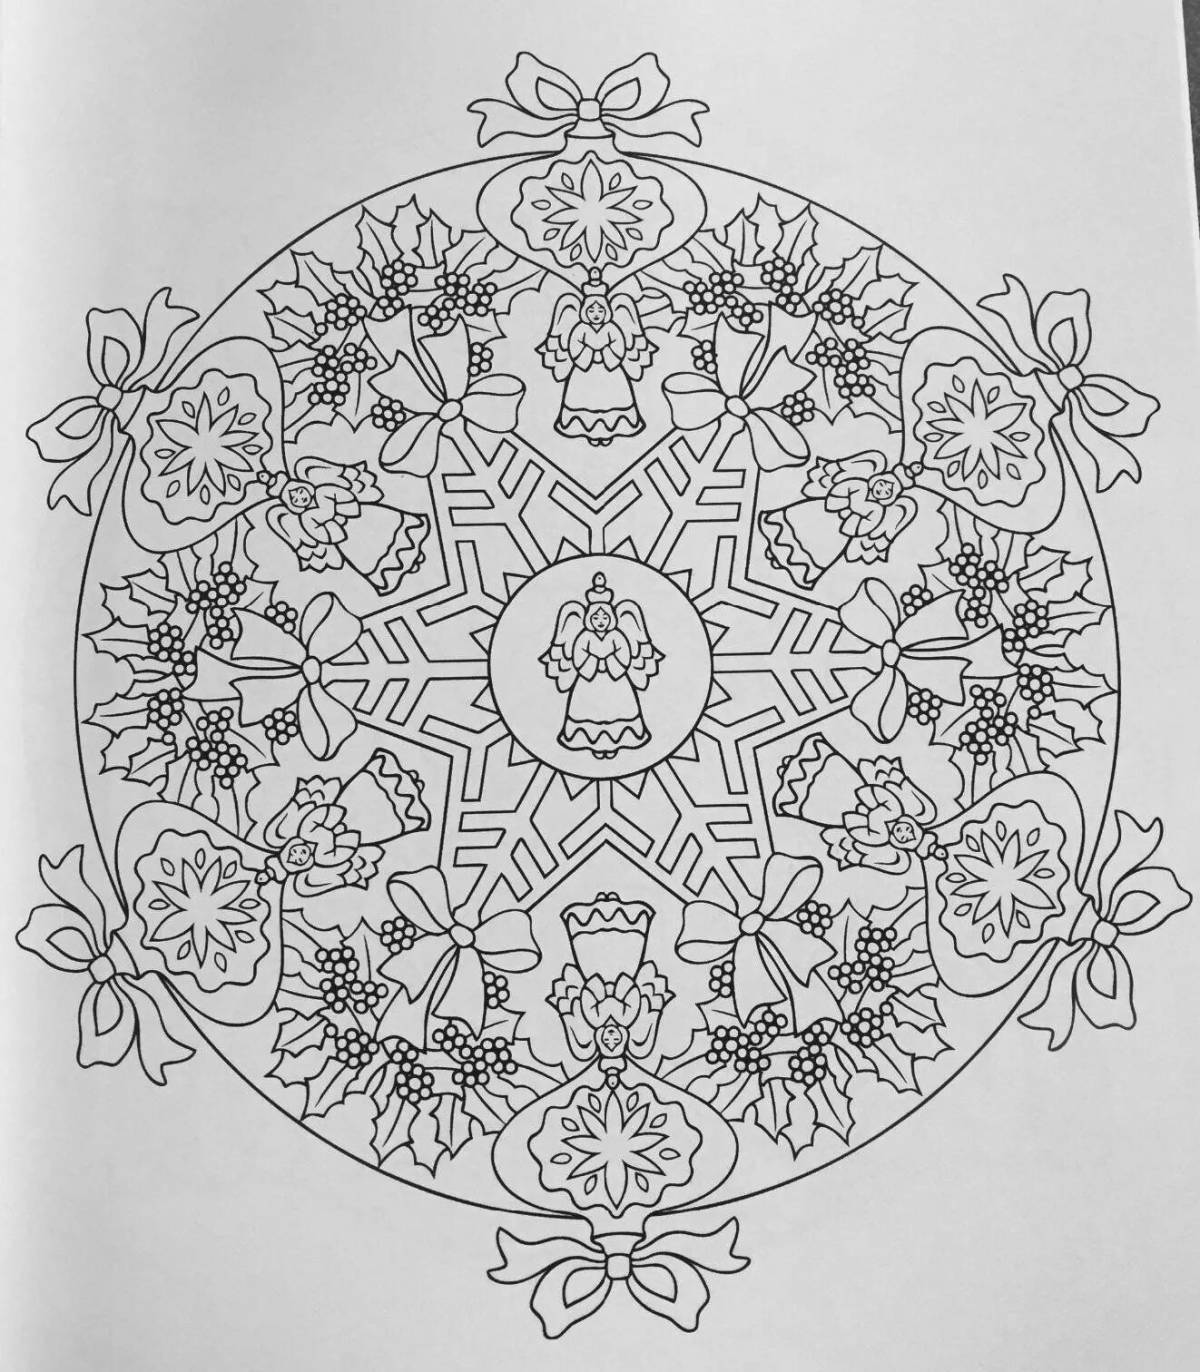 Glorious New Year's mandala coloring page